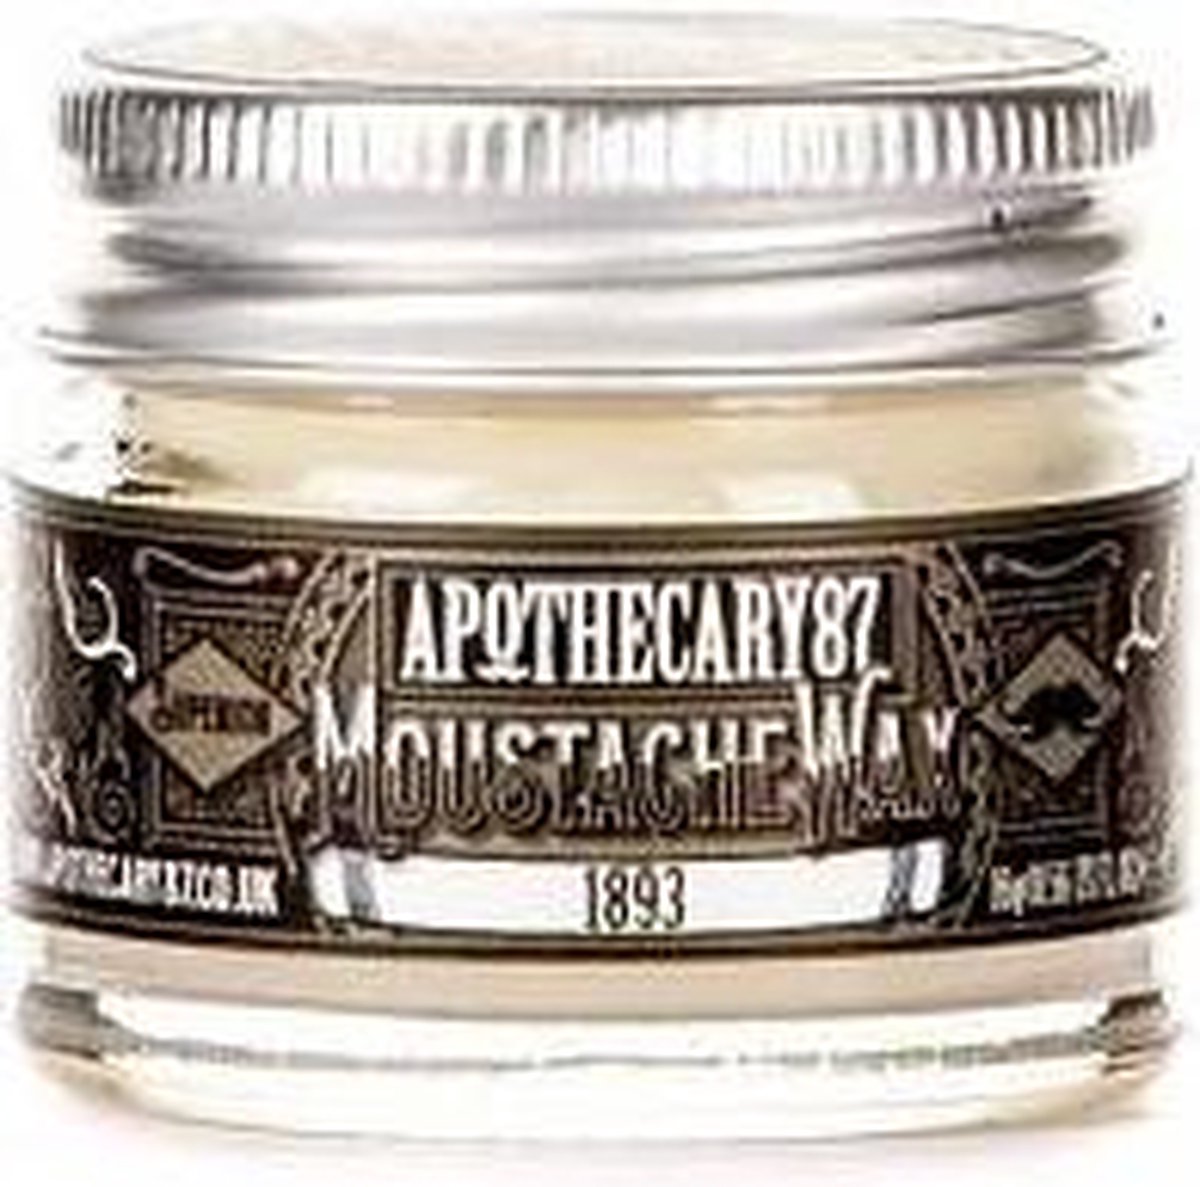 Apothecary 87 Moustache Wax - An 1893 Fragrance